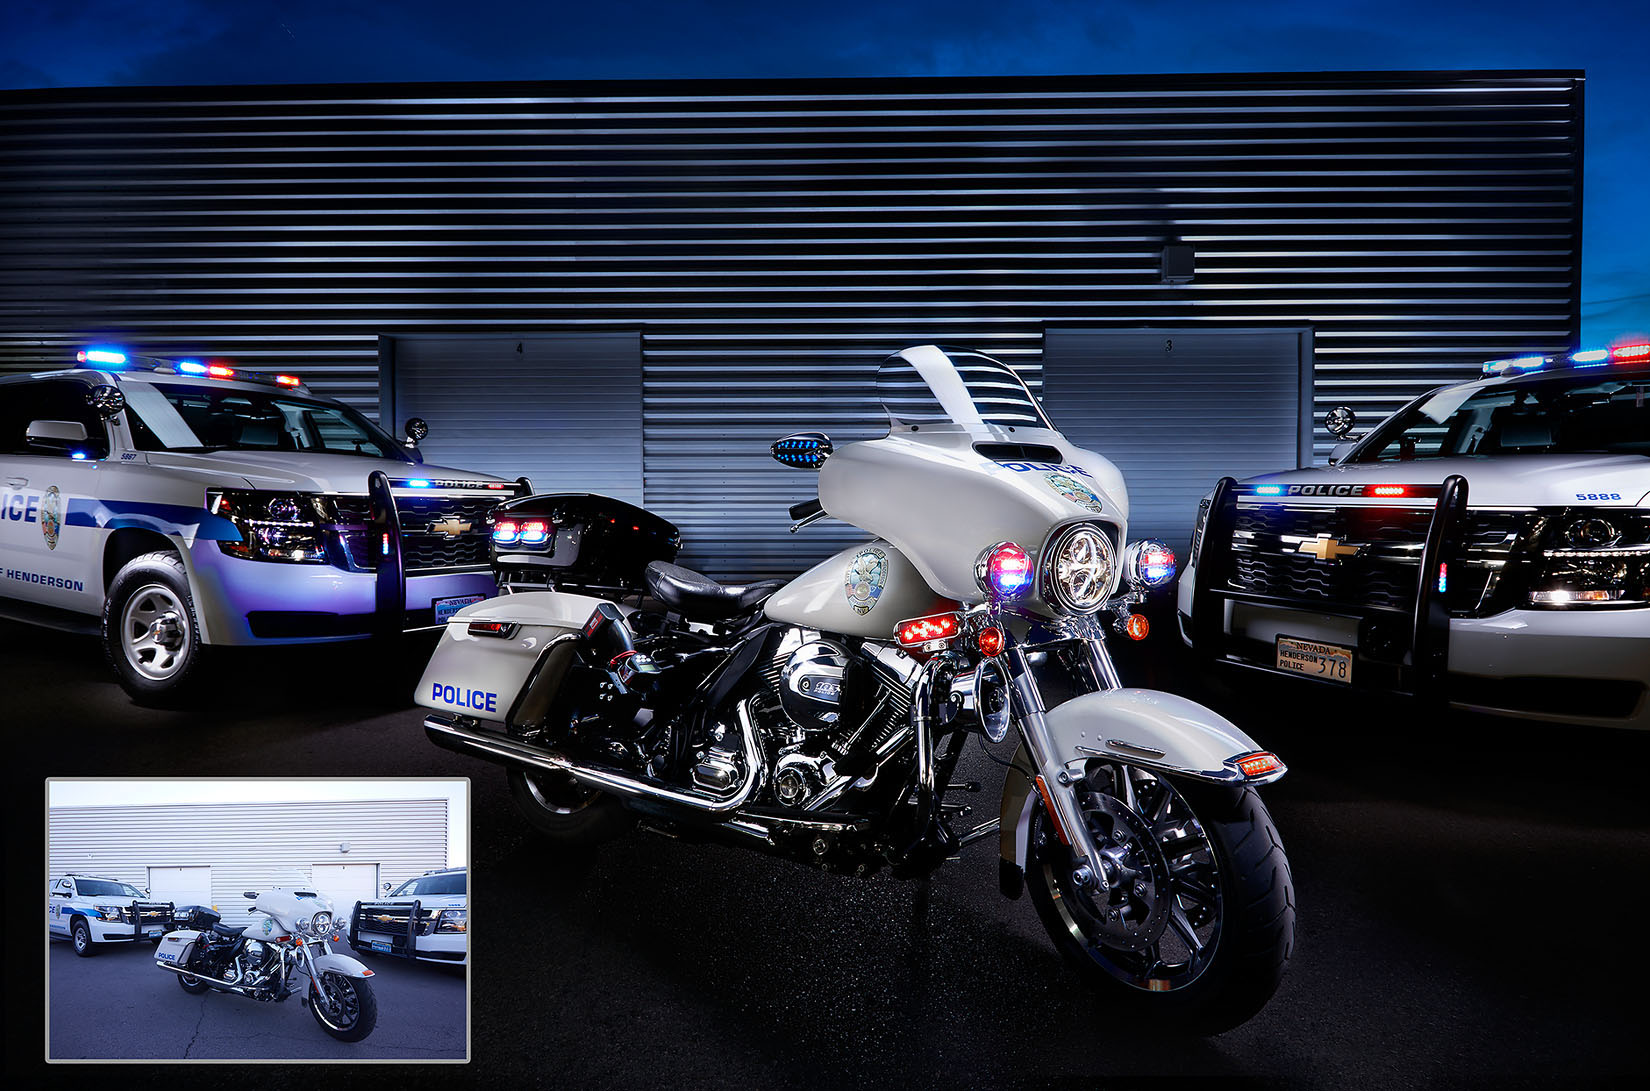 las vegas car photographer long exposure light painting art police patrol car bike